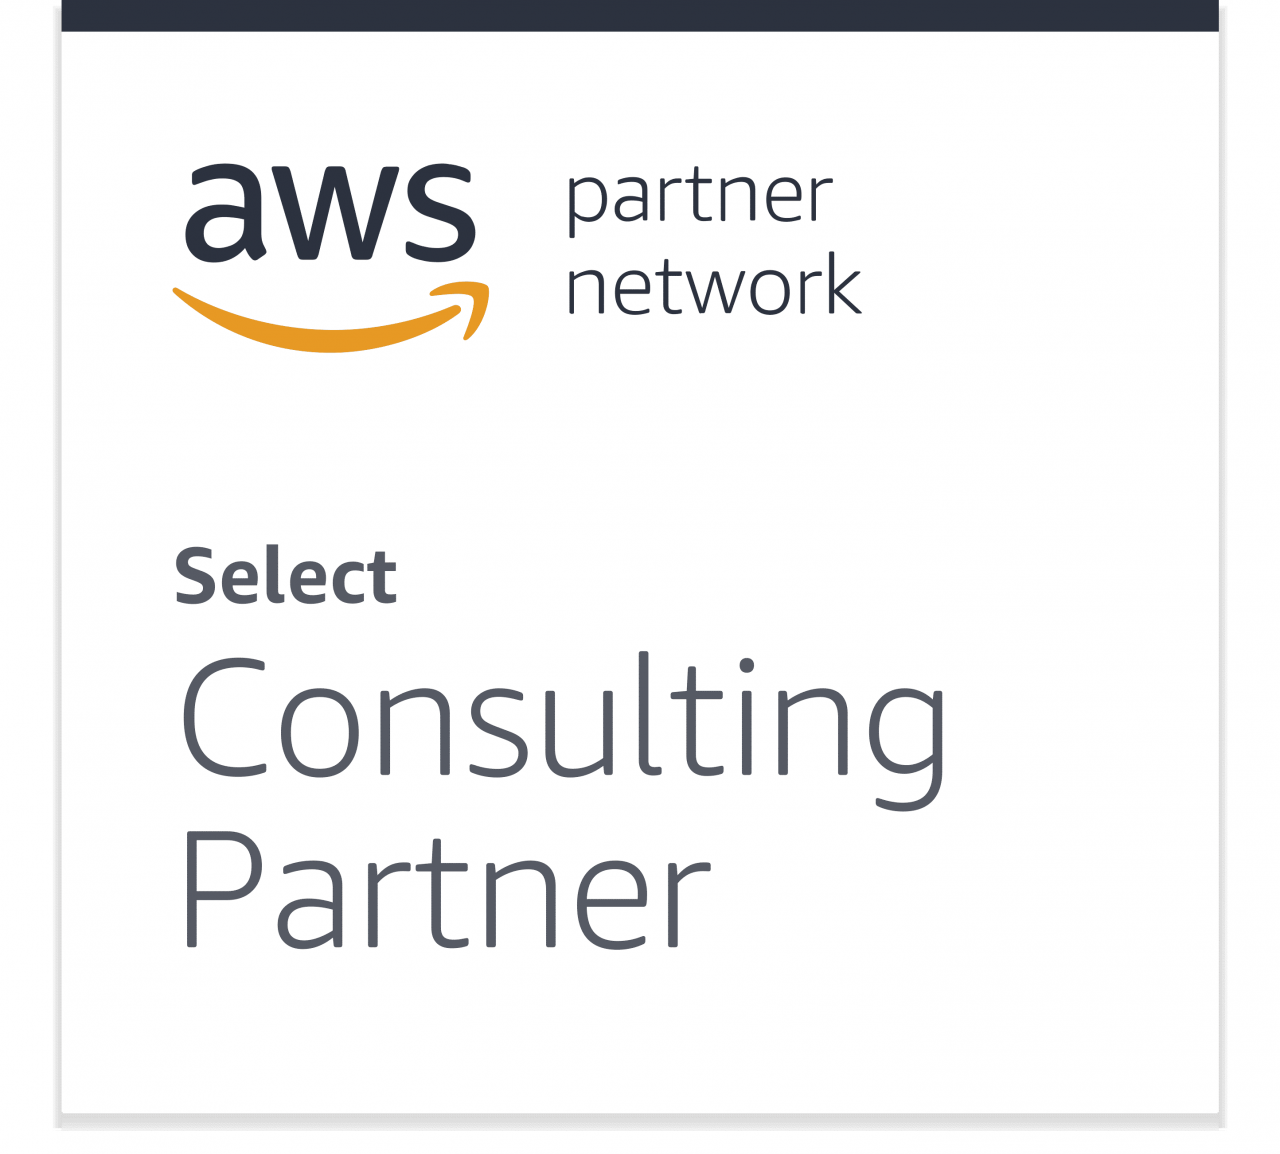 AWS Partner Network (APN) consulting partners